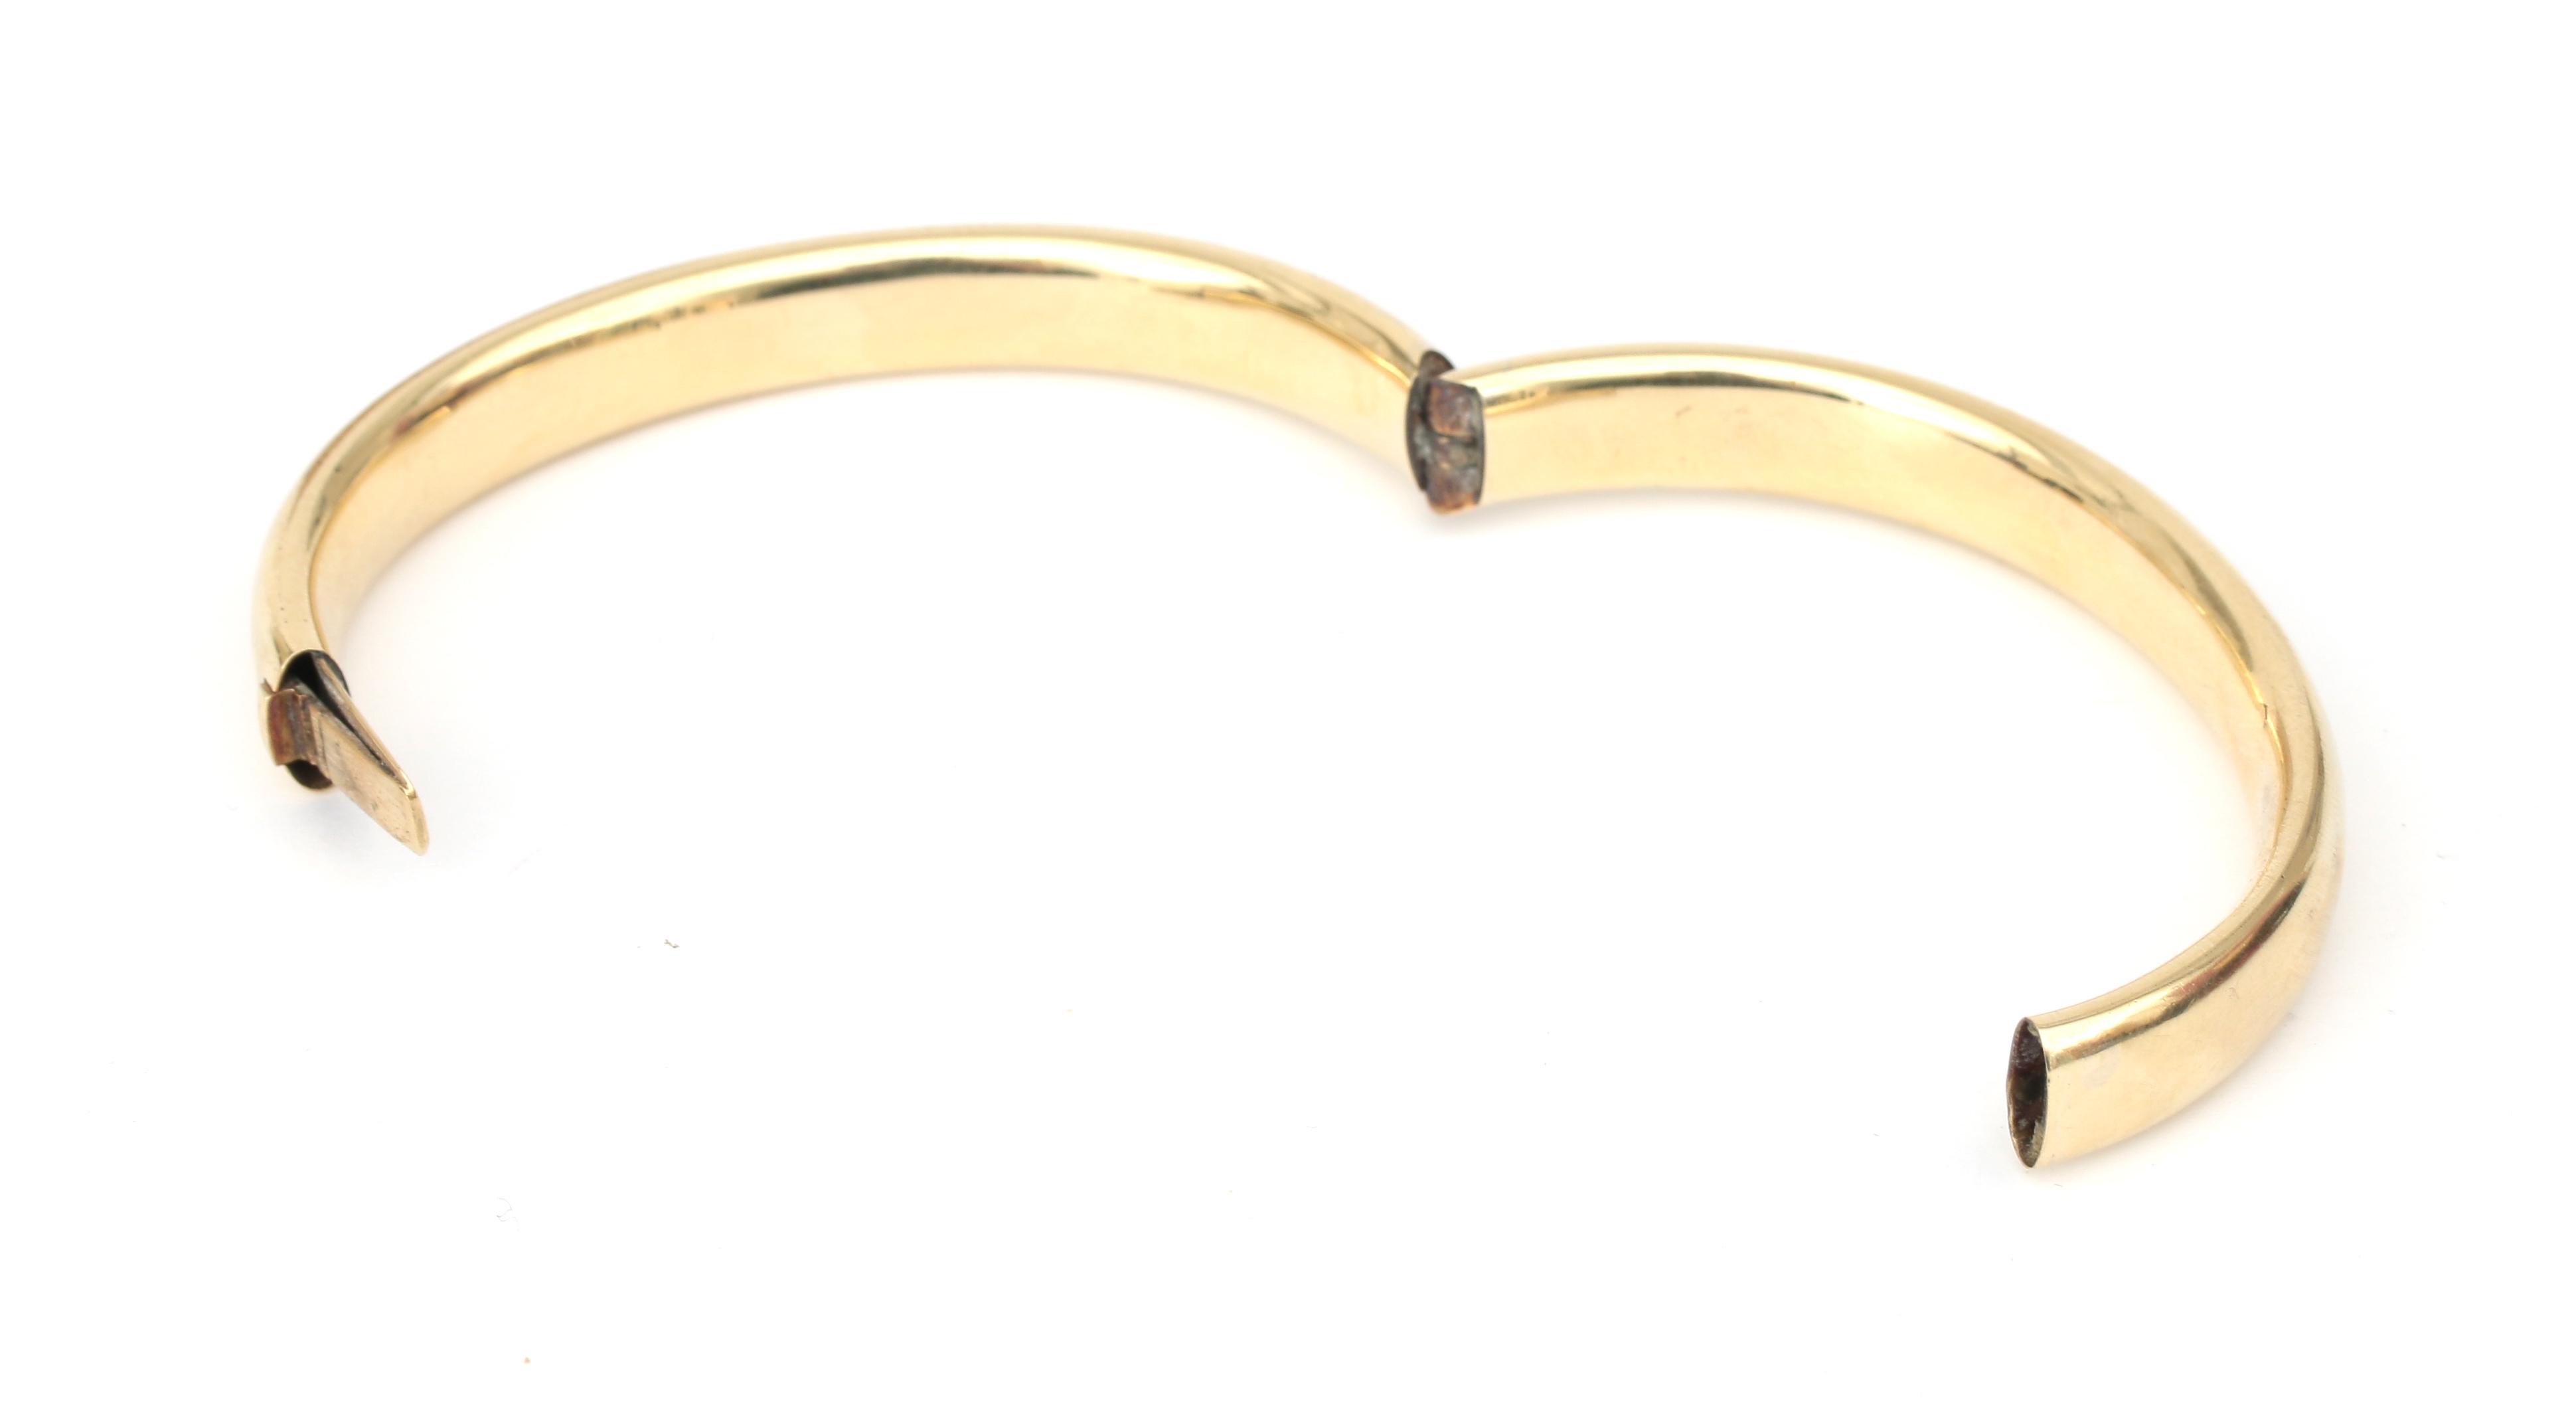 A 14 karat gold bangle - Image 3 of 3